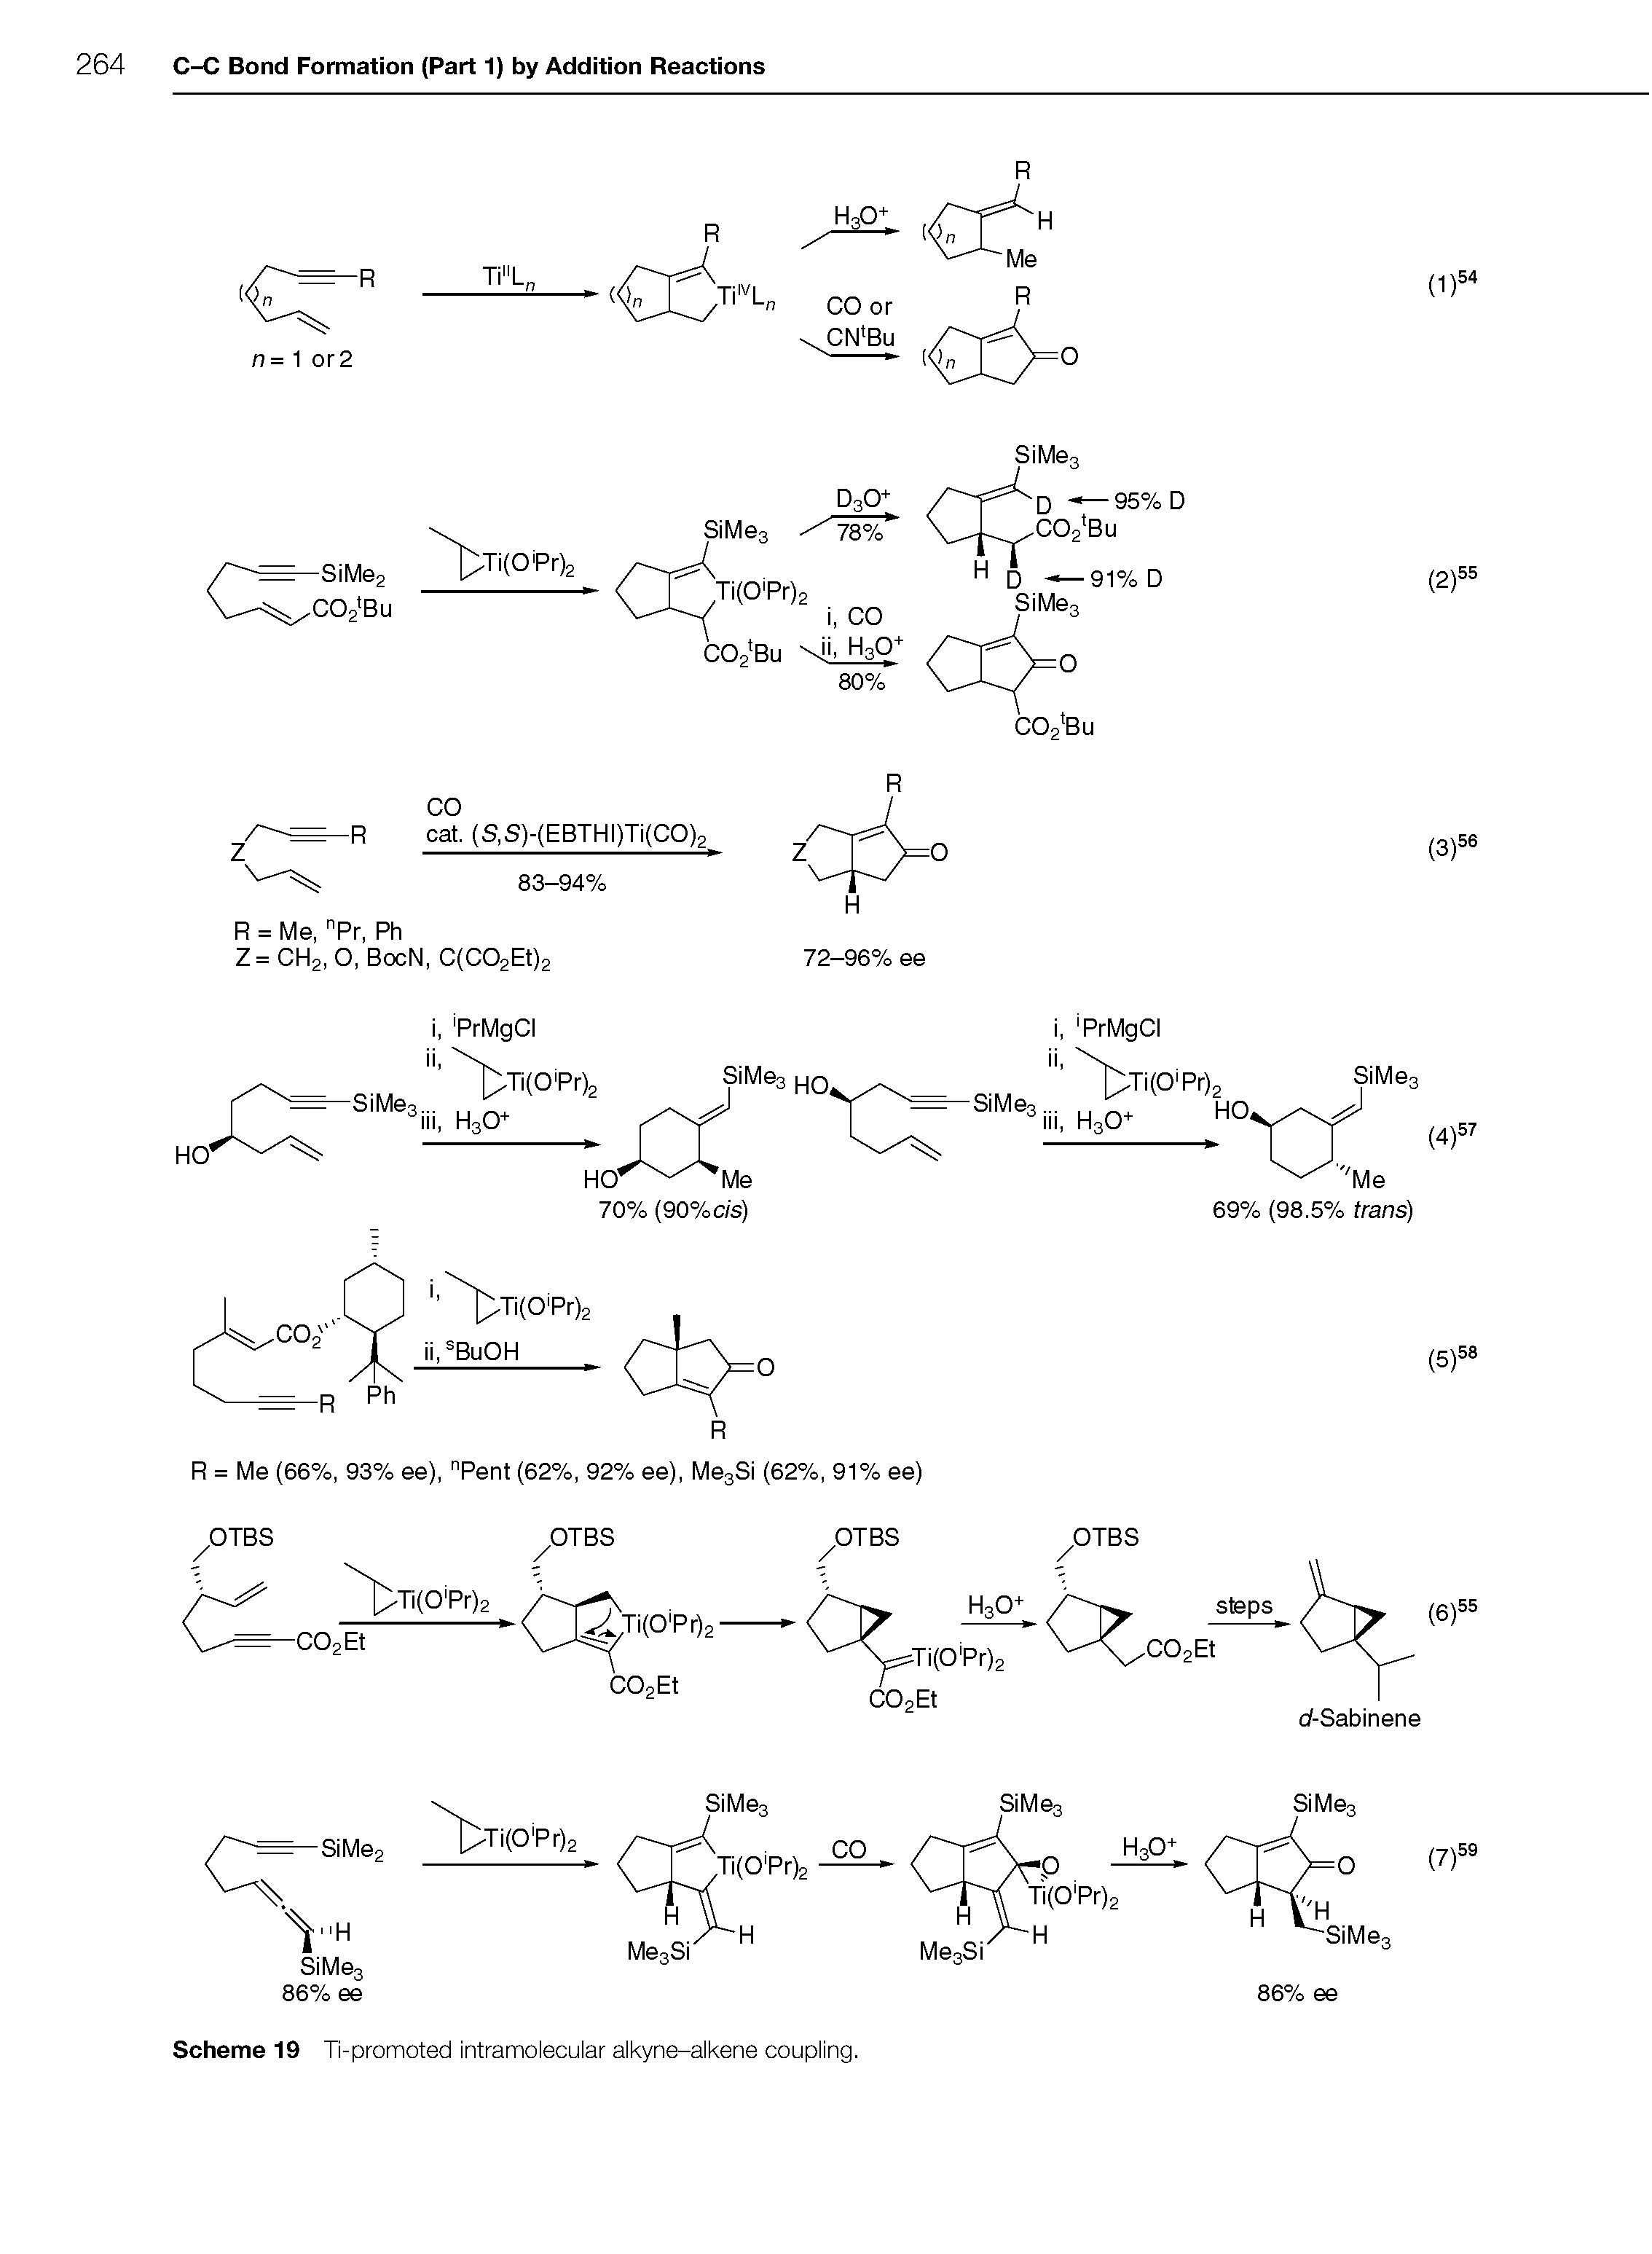 Scheme 19 Ti-promoted intramolecular alkyne-alkene coupling.